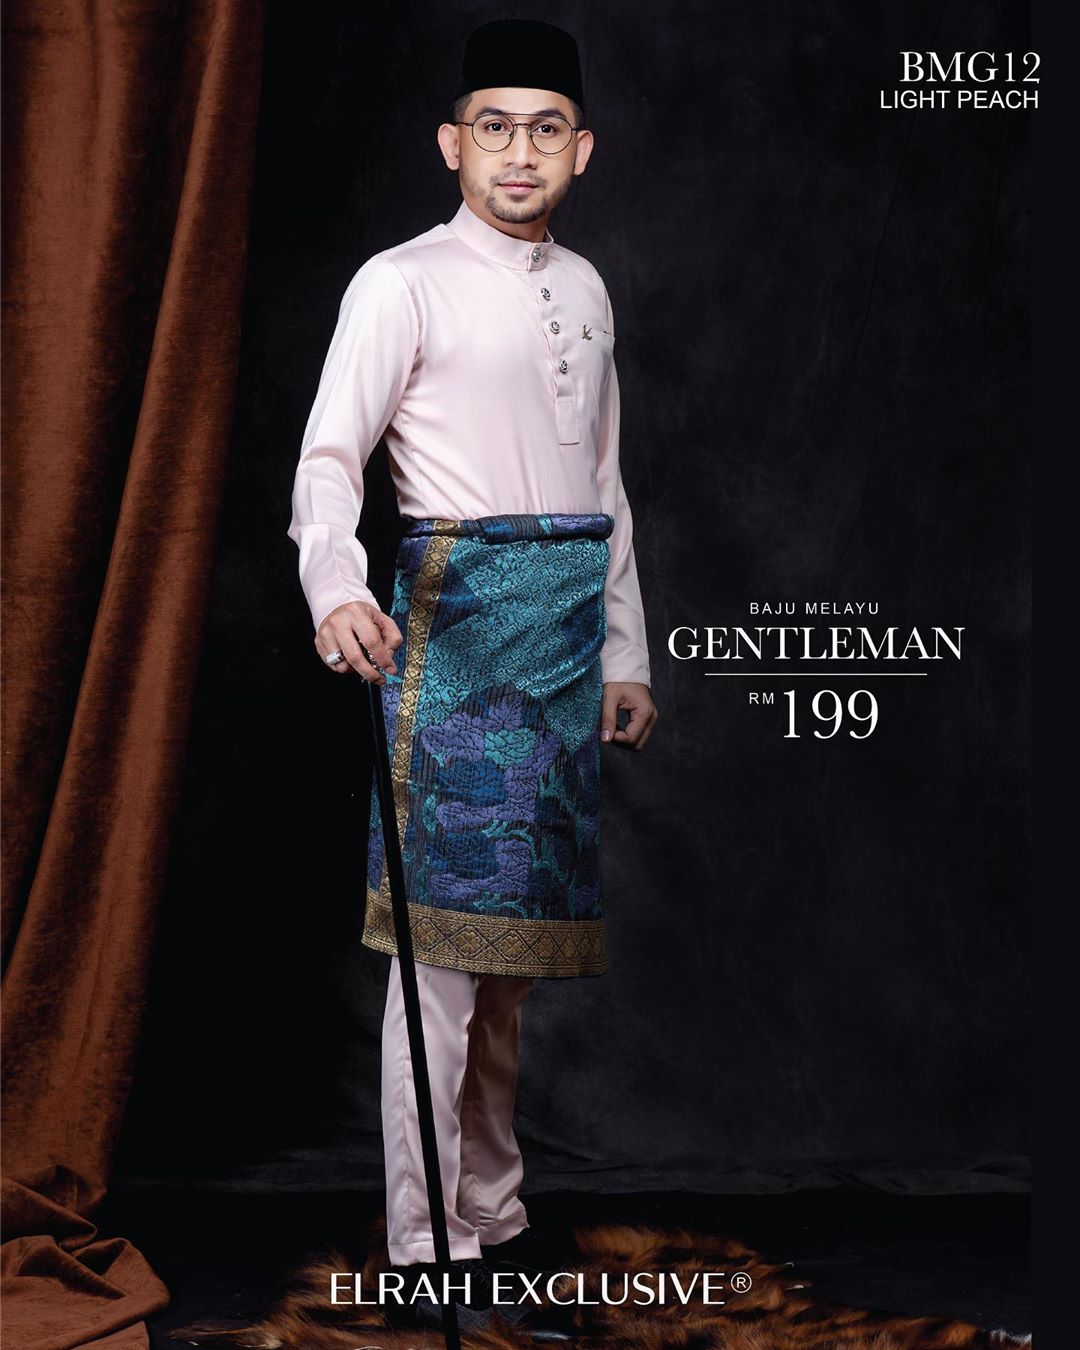 Baju Melayu Gentleman Light Peach